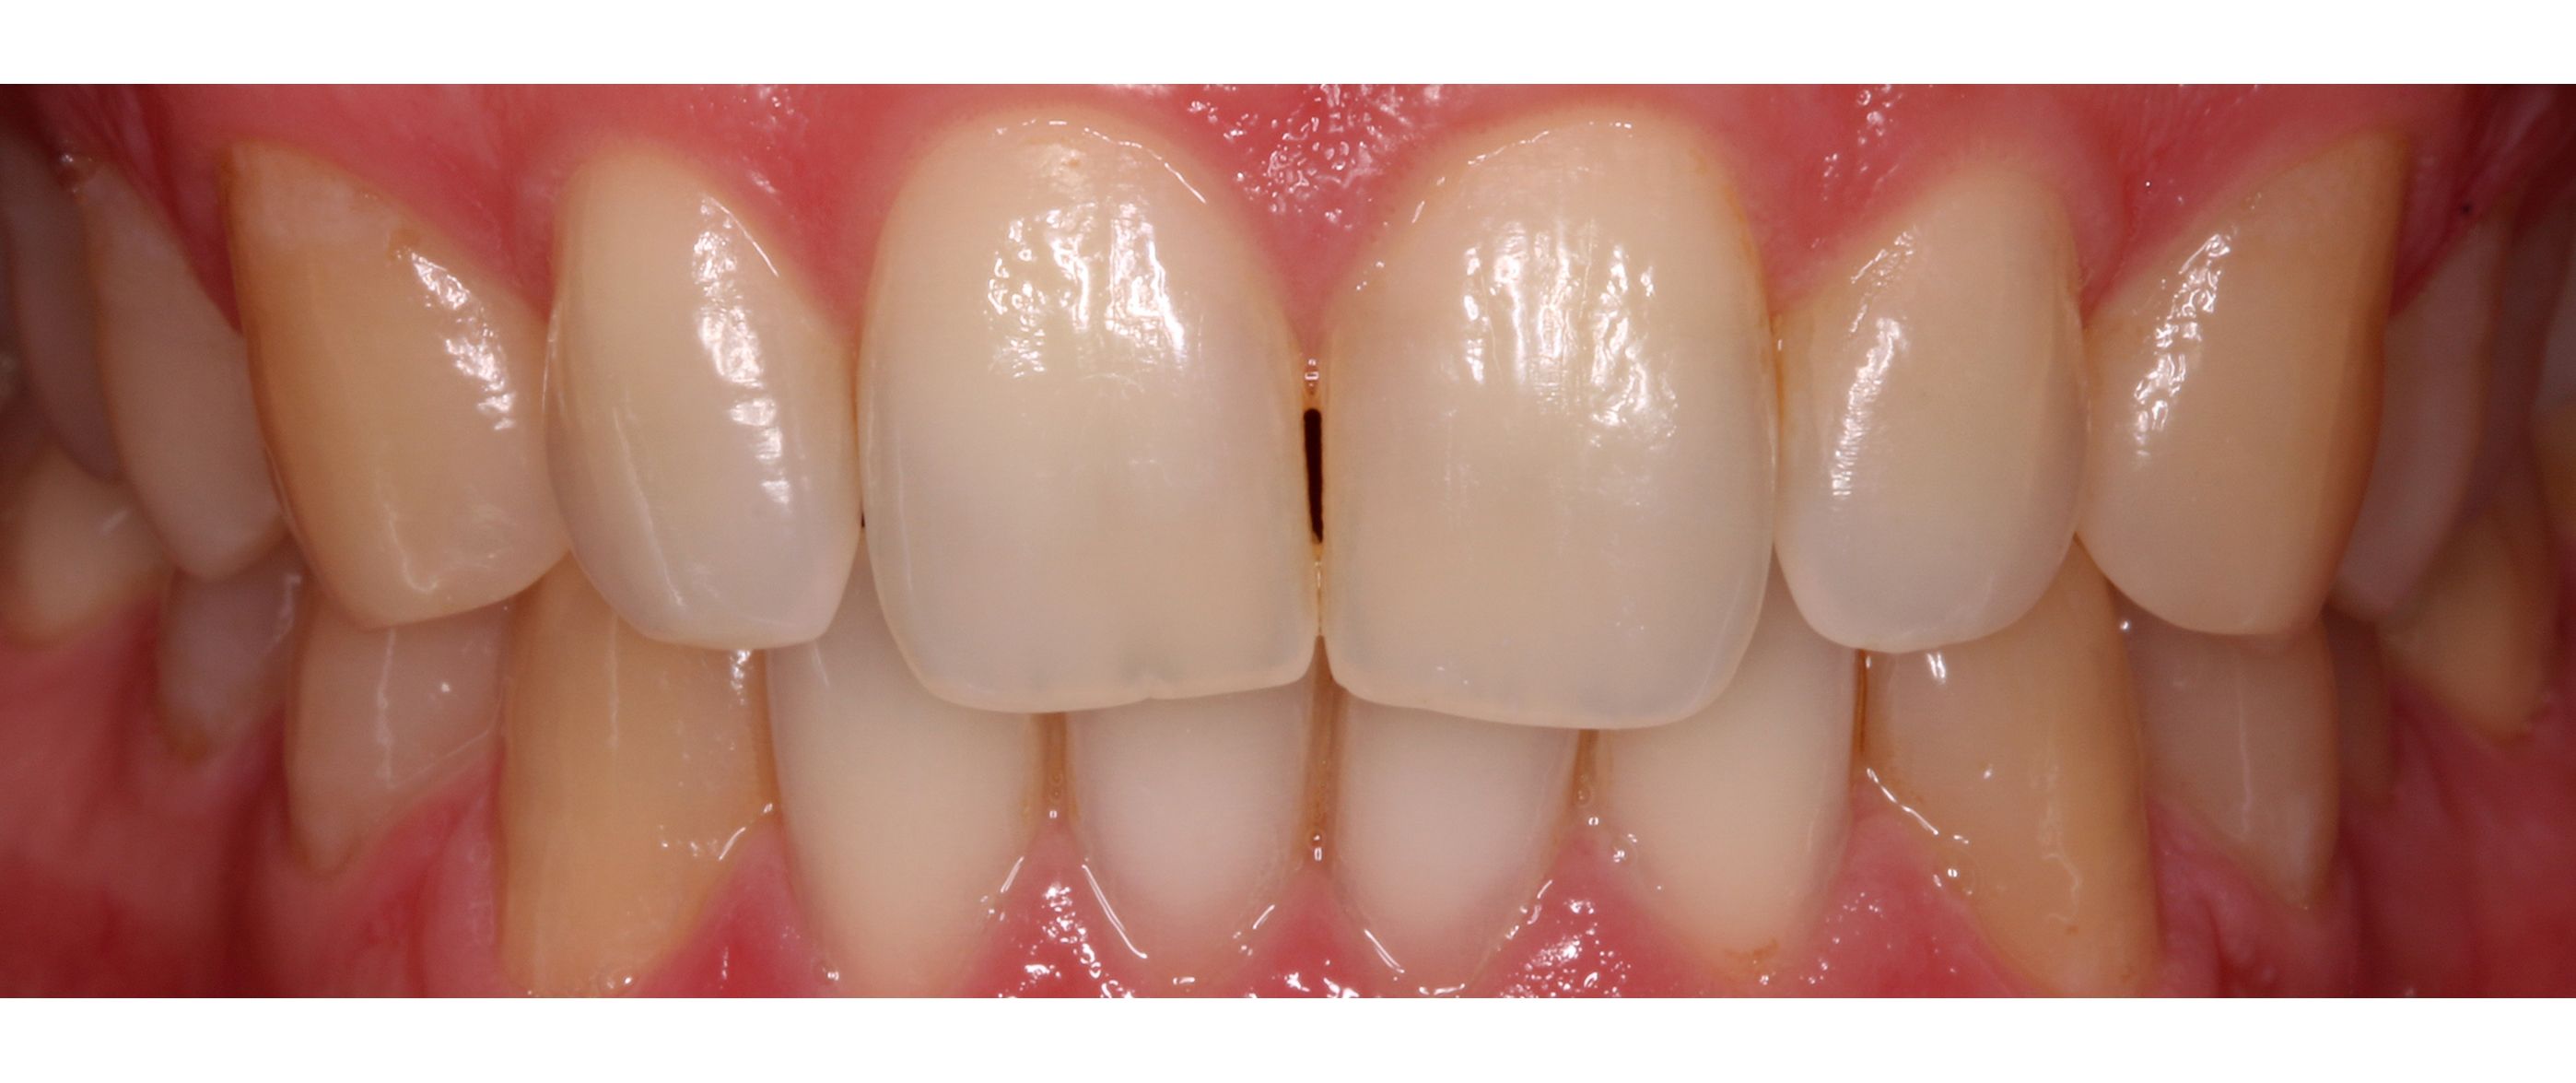 Dental whitening treatment. Padrós dental clinic, dentist in Barcelona